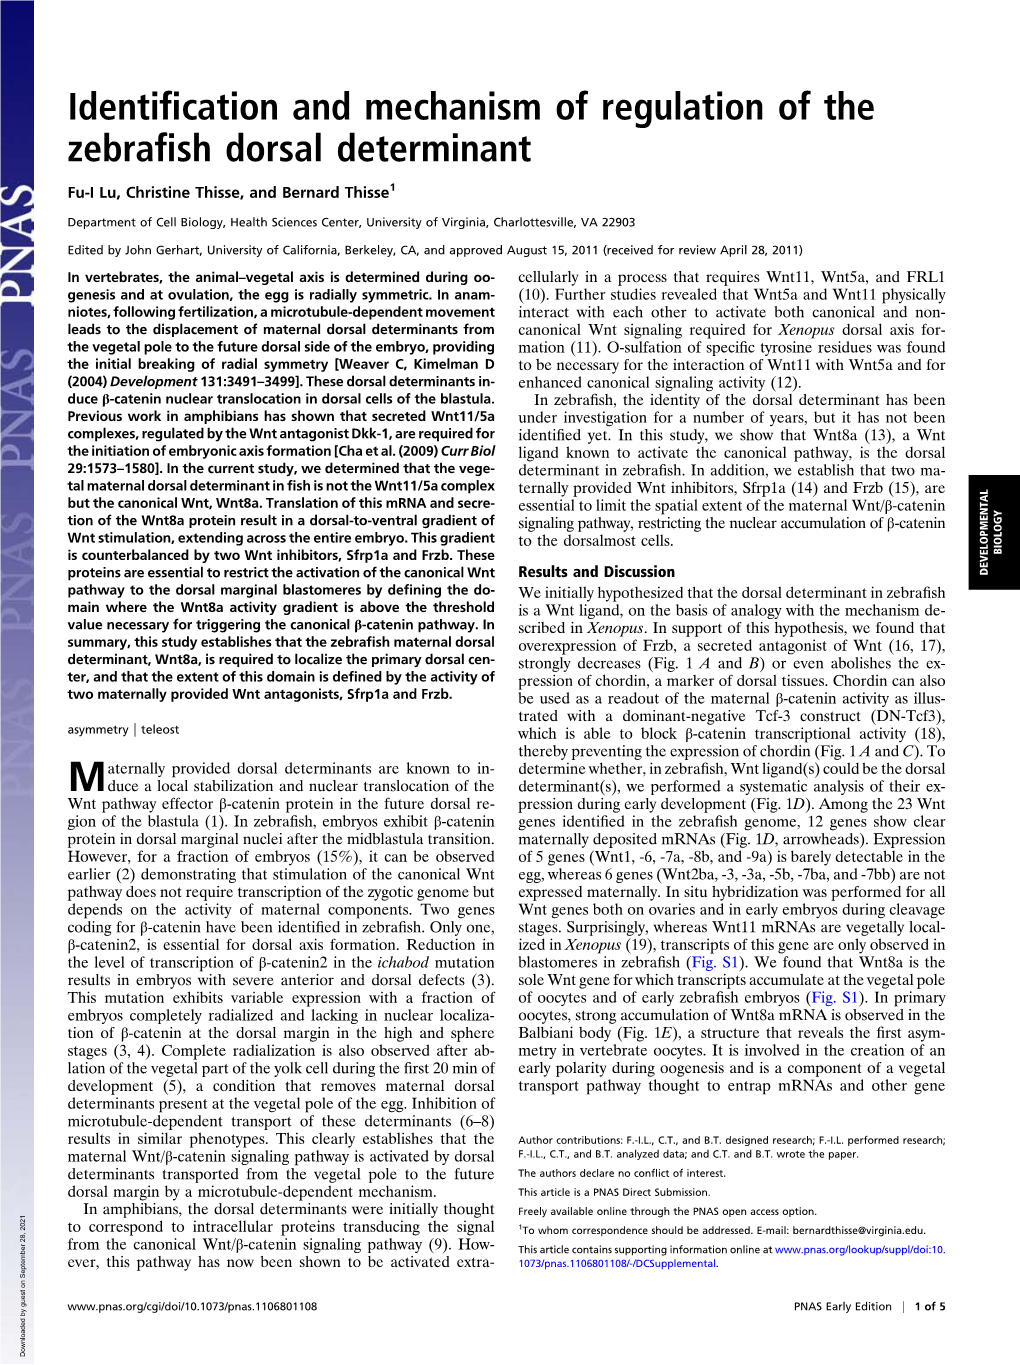 Identification and Mechanism of Regulation of the Zebrafish Dorsal